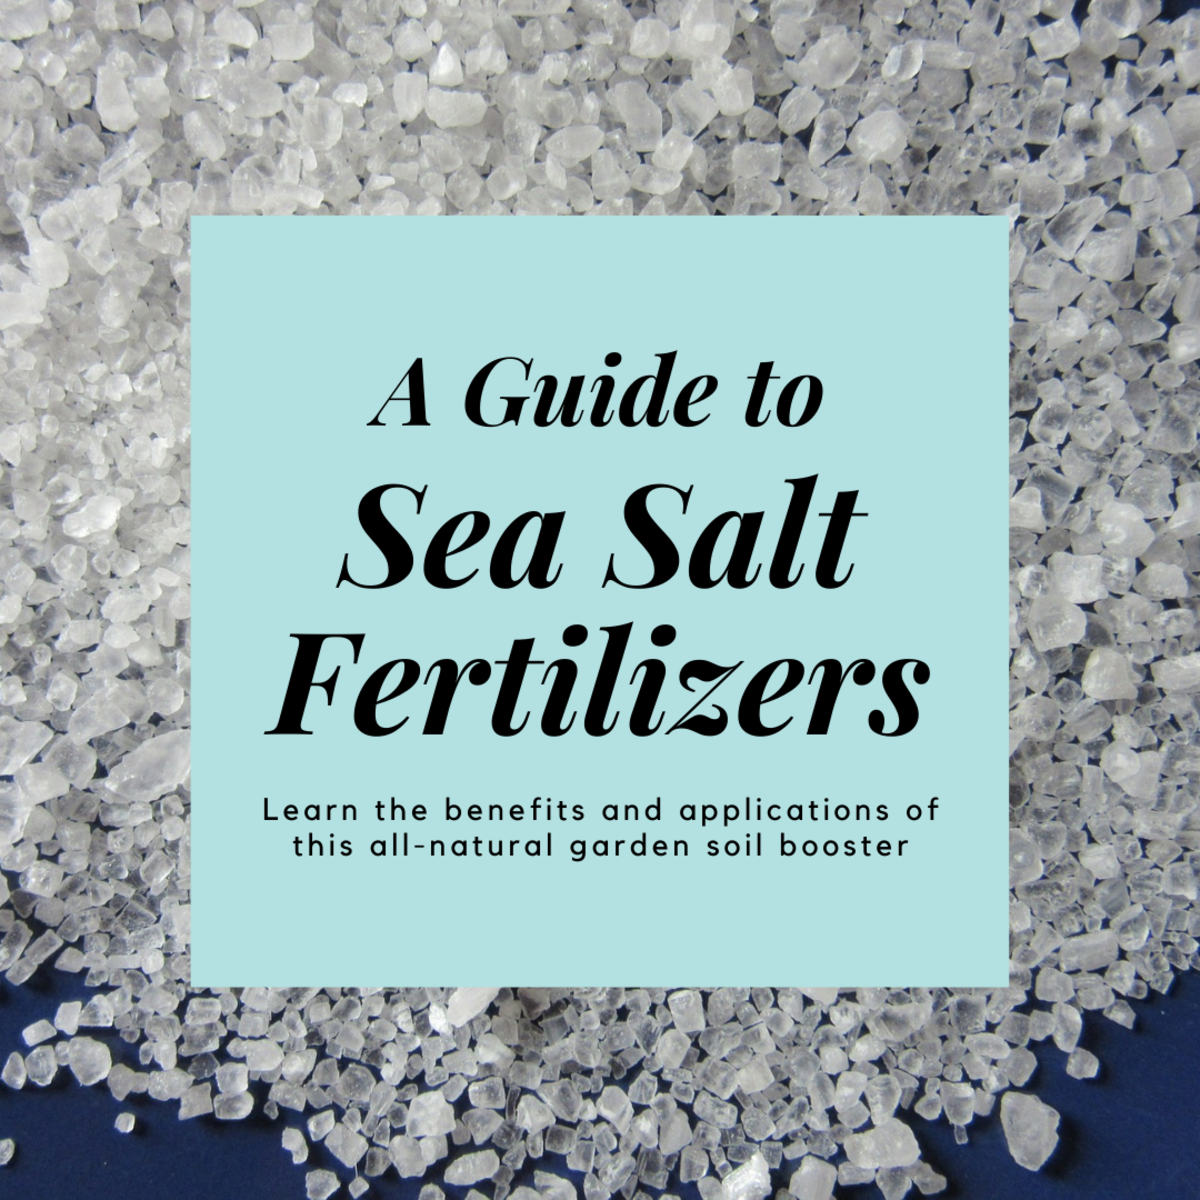 Sea Salt Fertilizers: An Important Organic Gardening Discovery